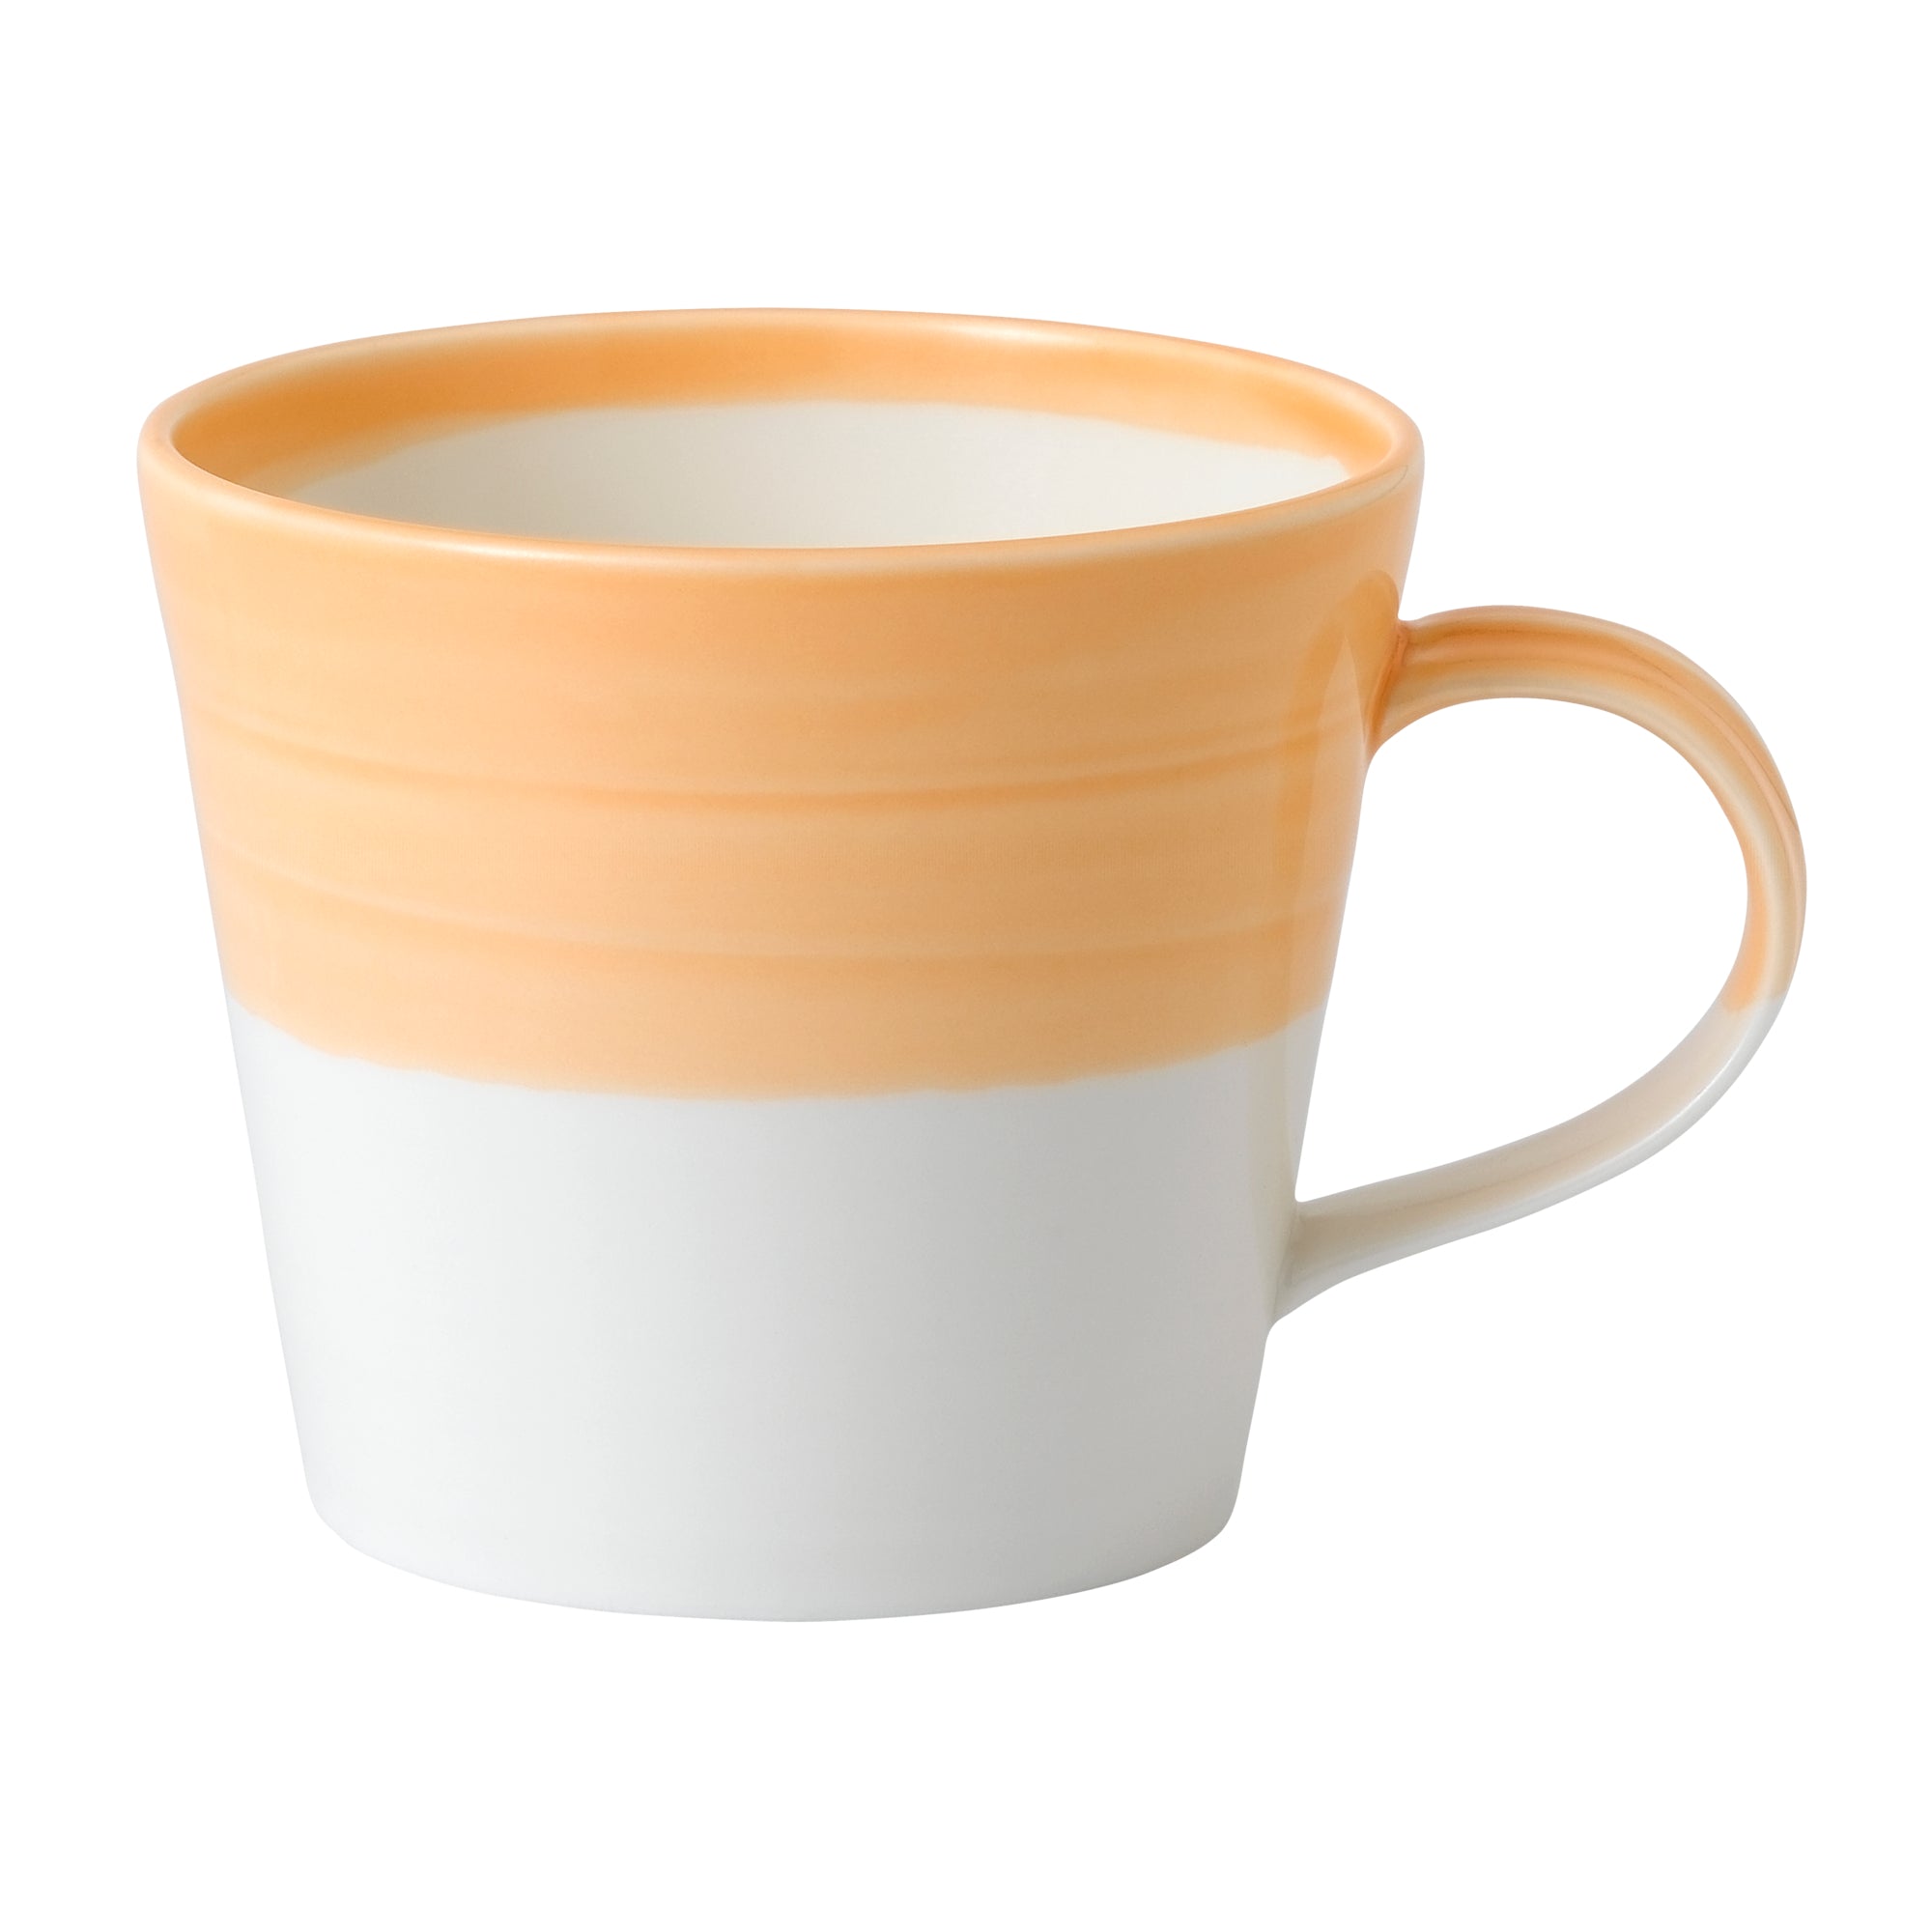 Royal Doulton 1815 Brights Mug Orange - Last Chance to Buy